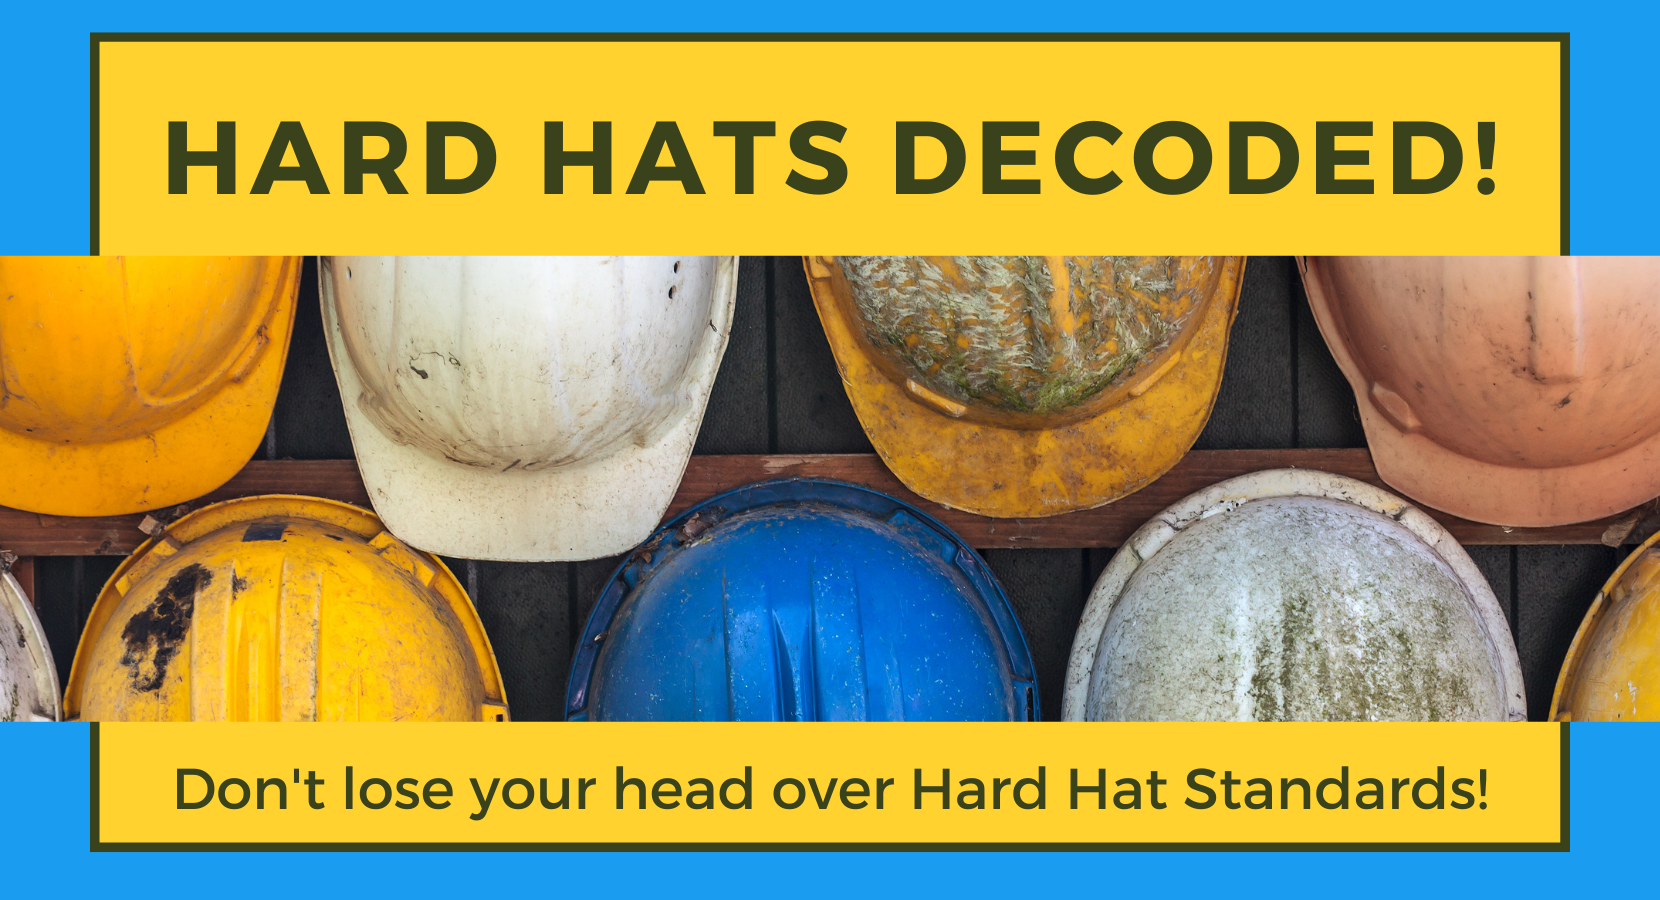 Hard Hats